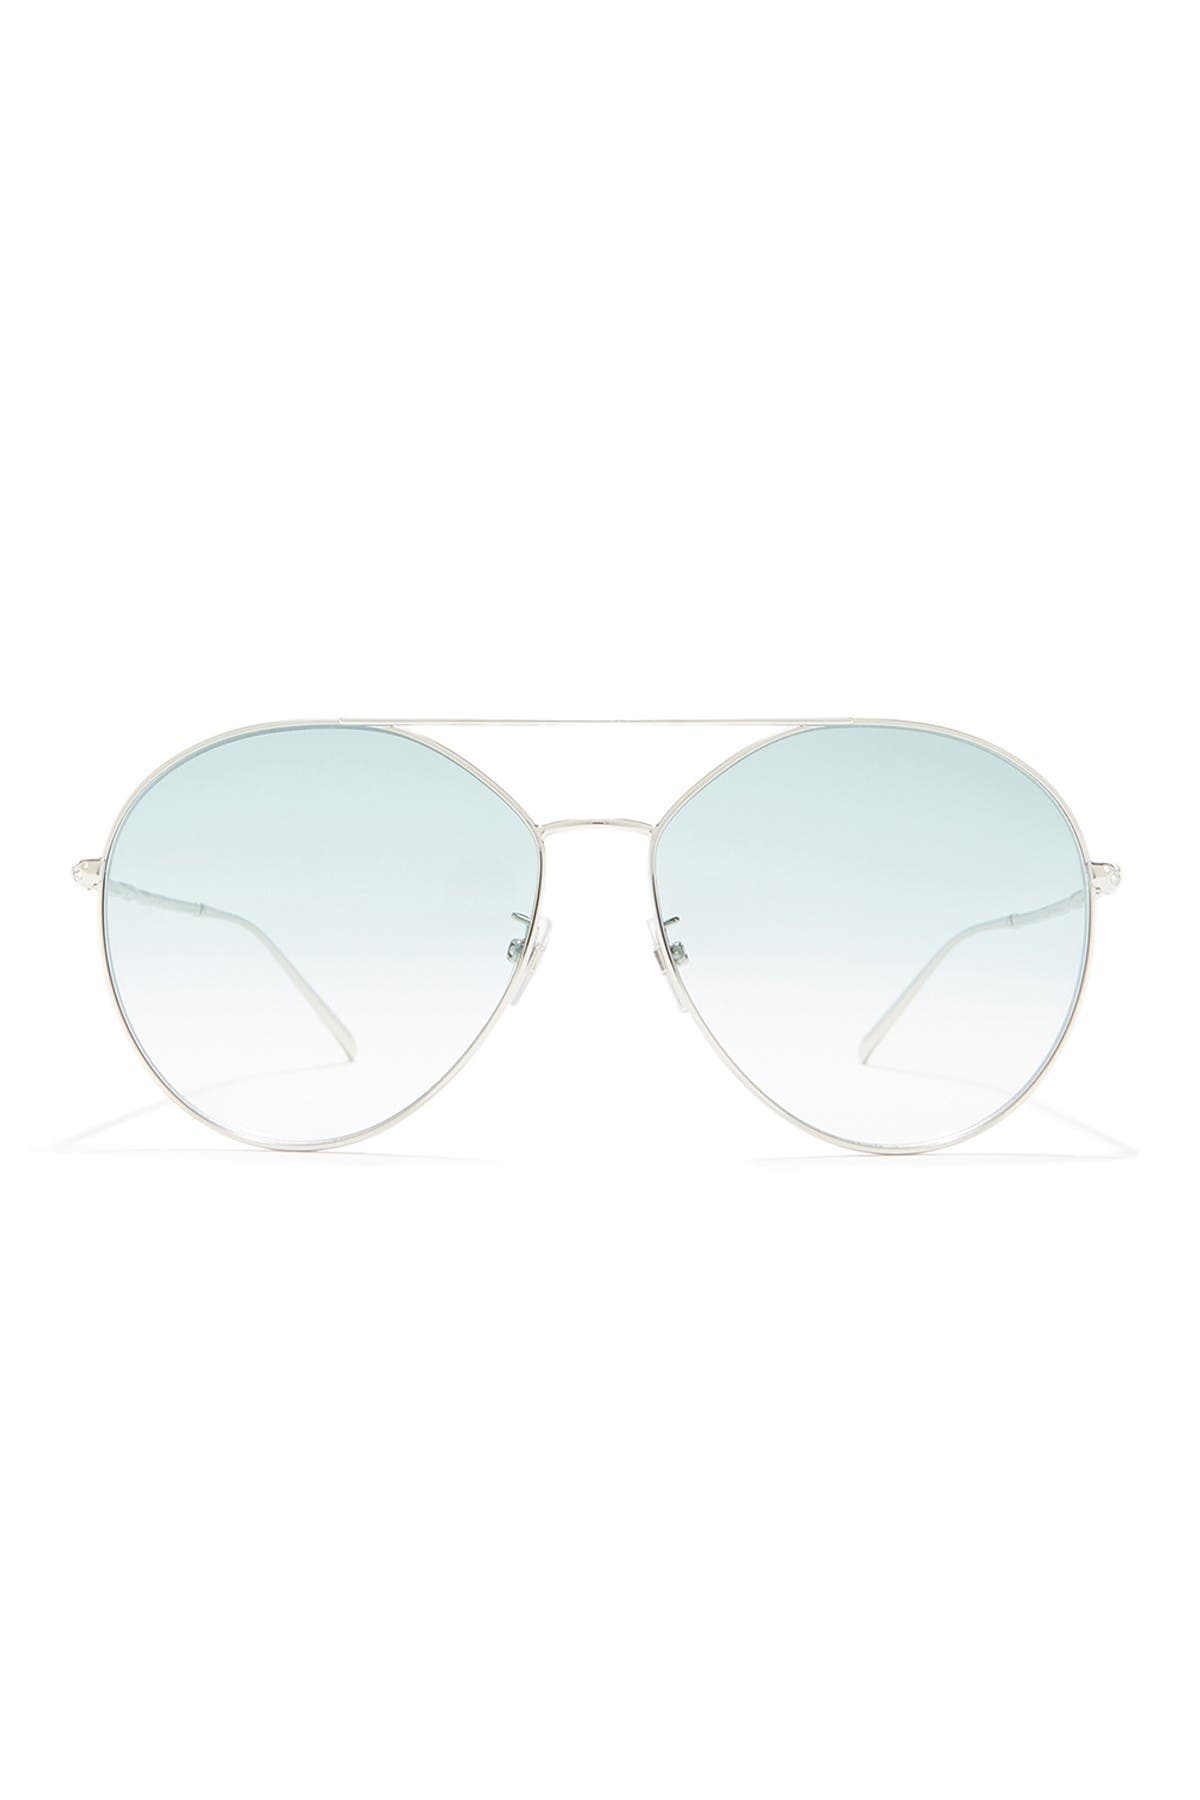 Givenchy | Oversized Aviator Sunglasses 